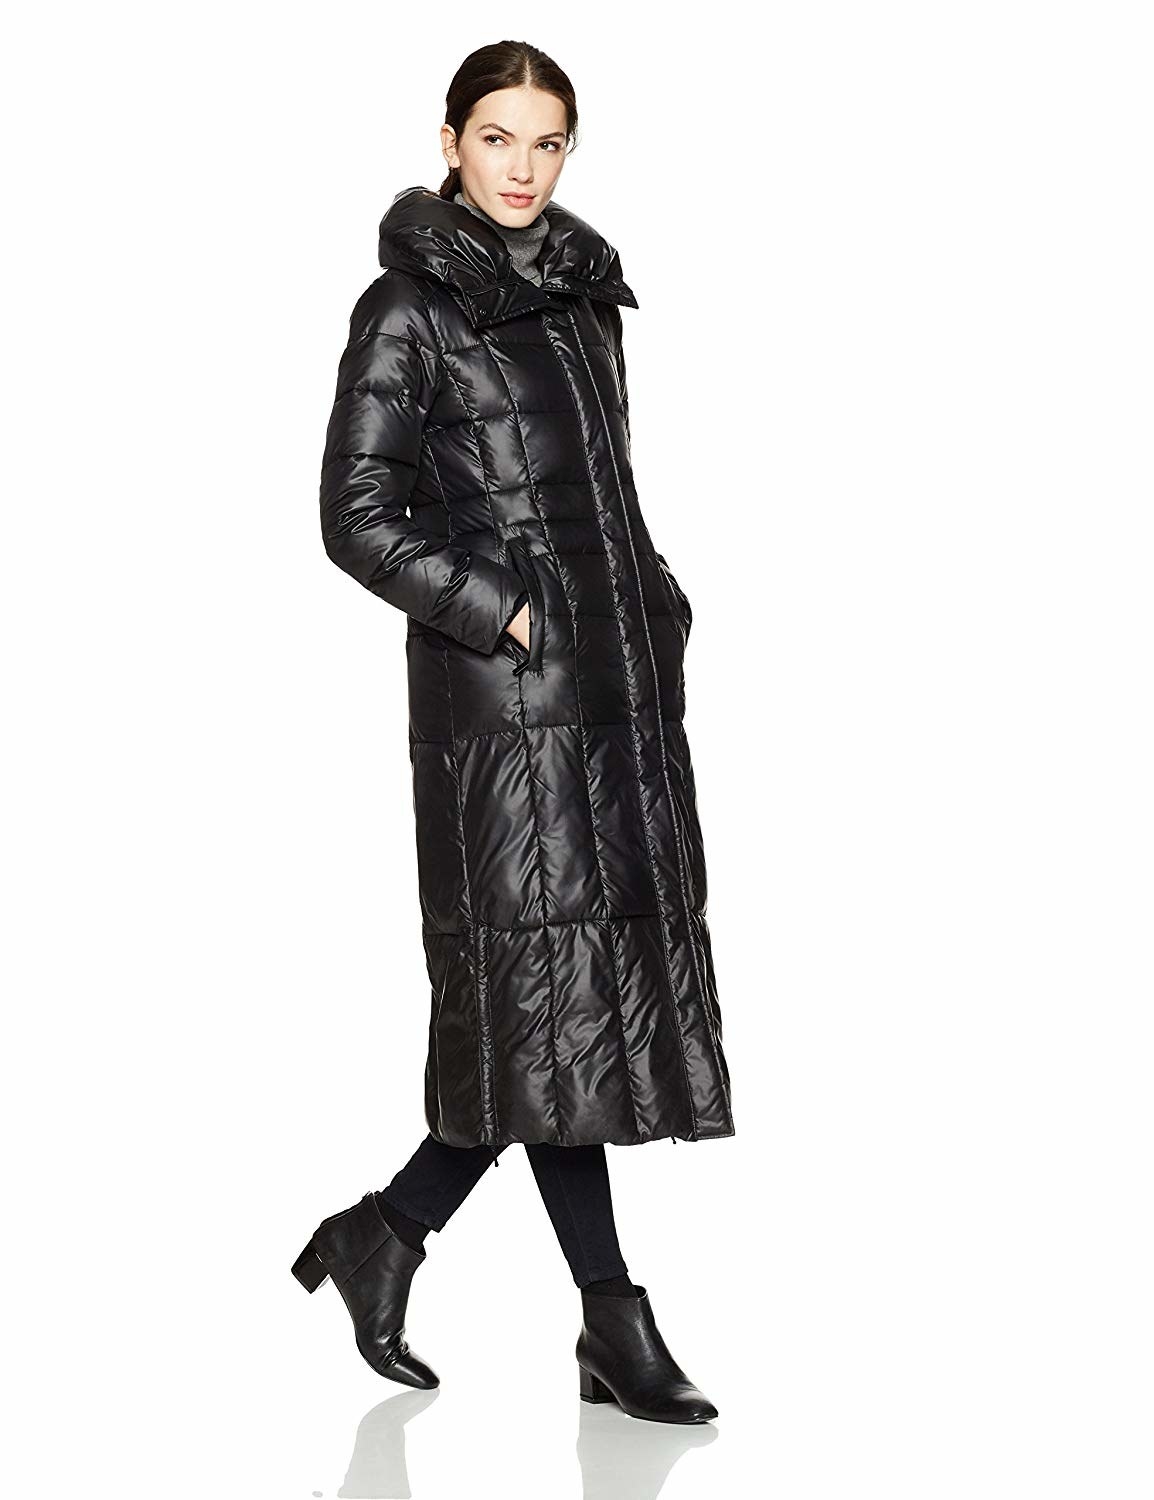 20 Stylish Winter Coats And Jackets Under $100